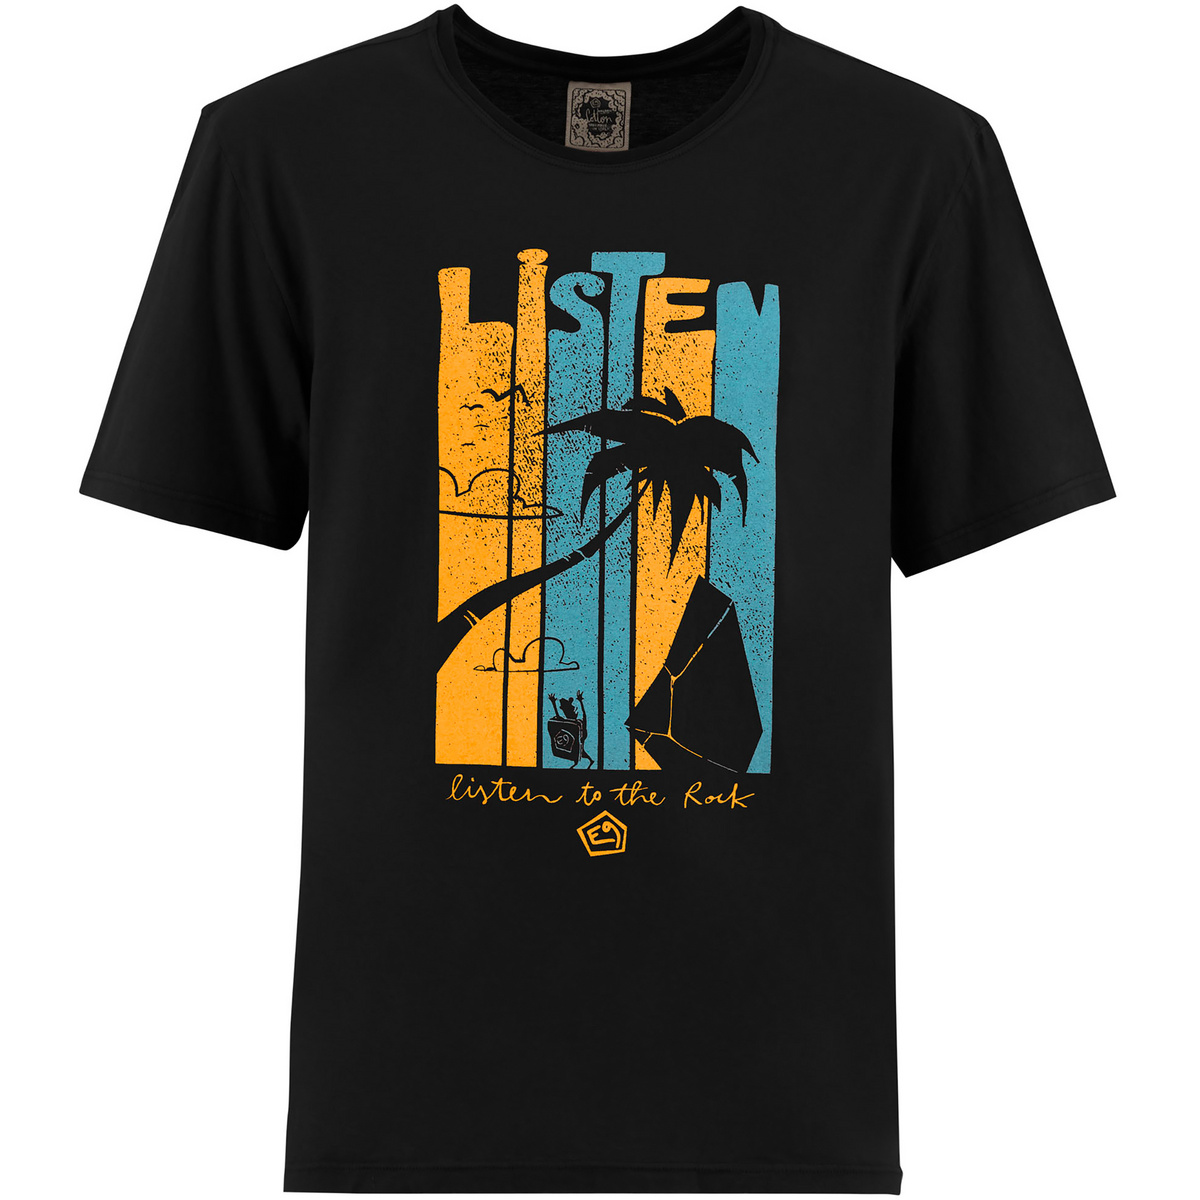 E9 Herren Beach T-Shirt von E9